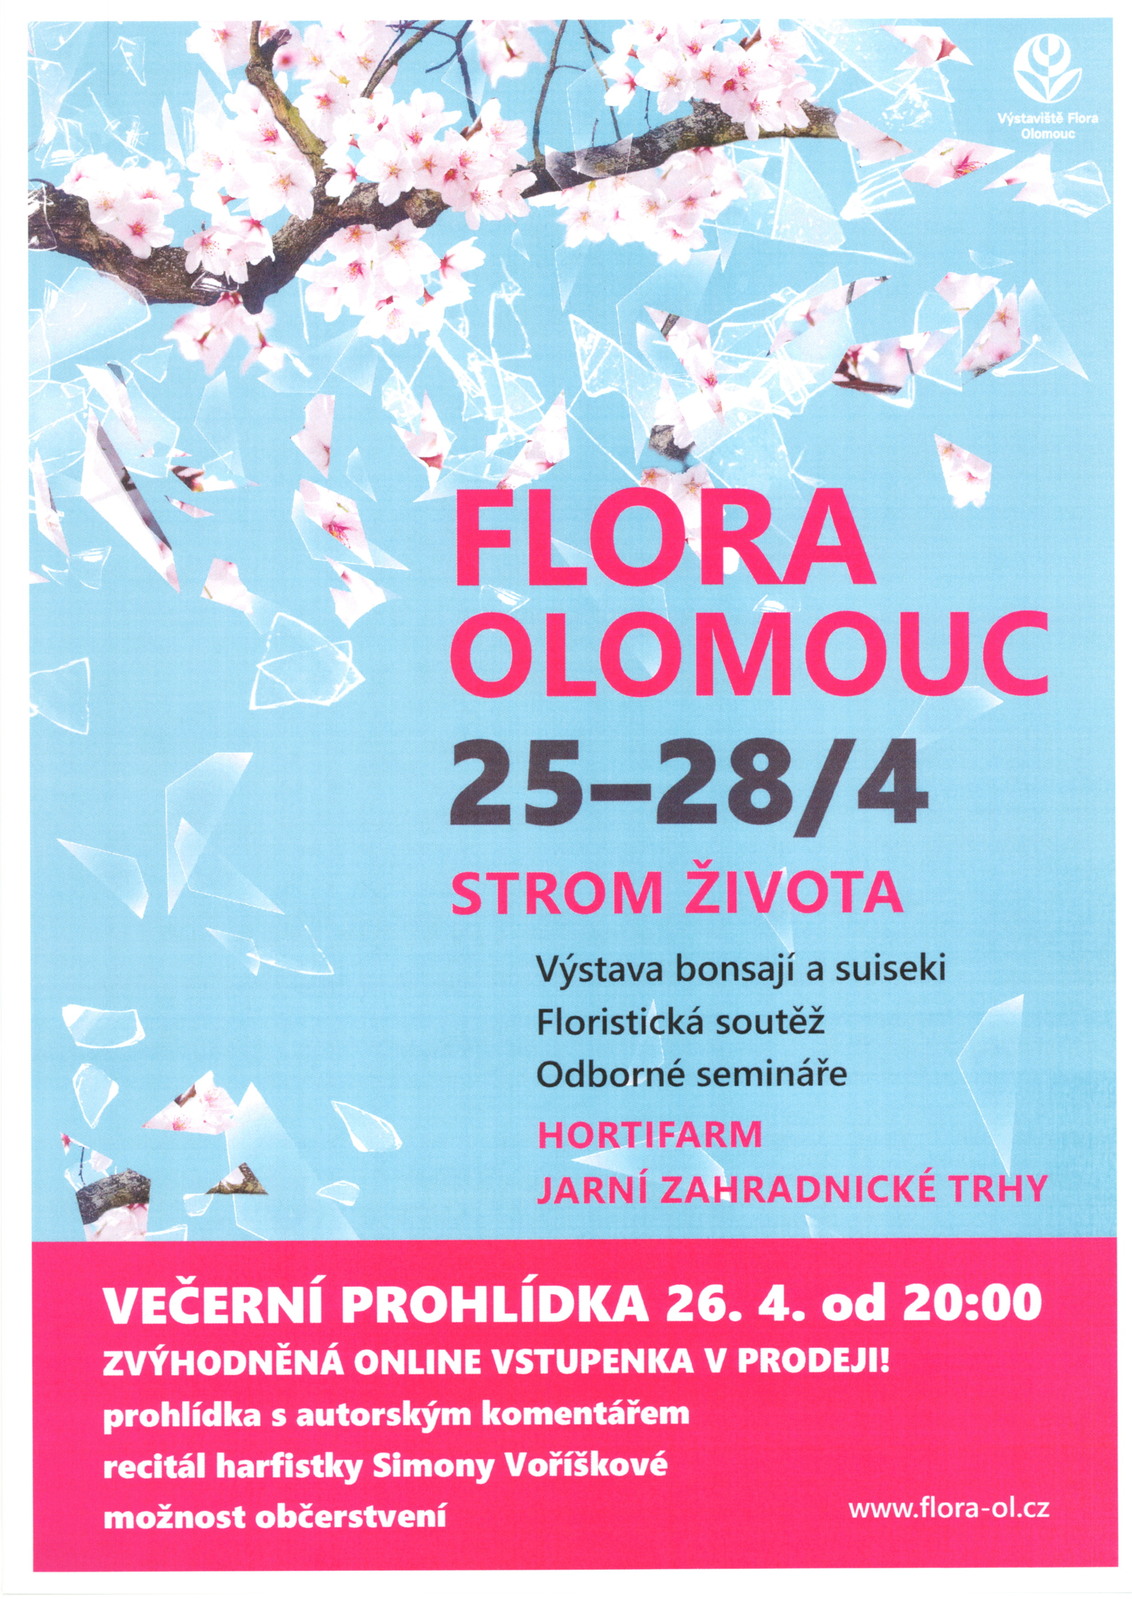 Flora Olomouc .jpg